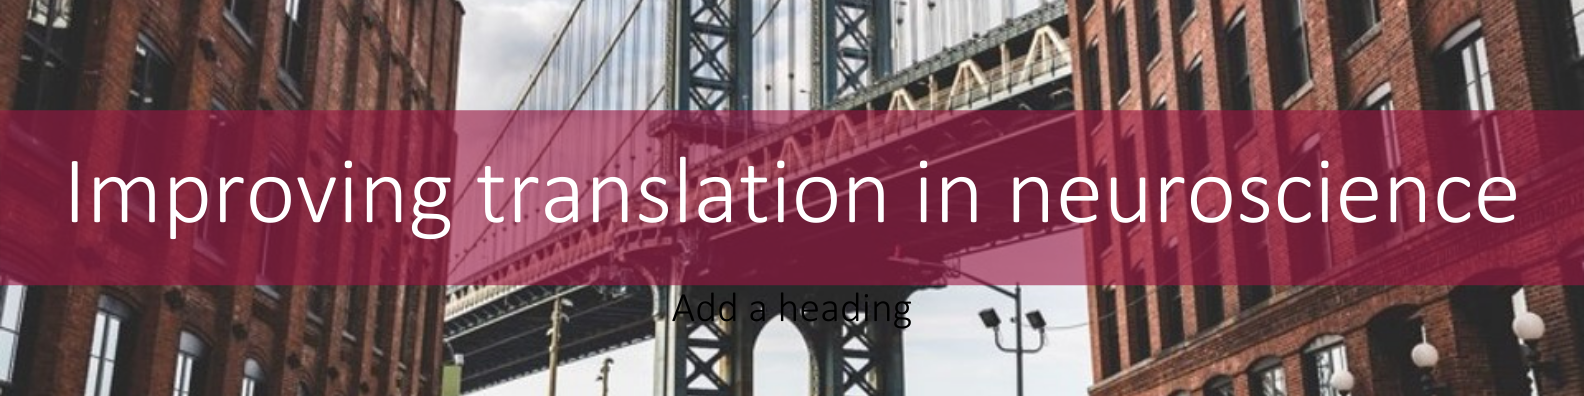 Bridge photo with text overlaid: improving translation in neuroscience